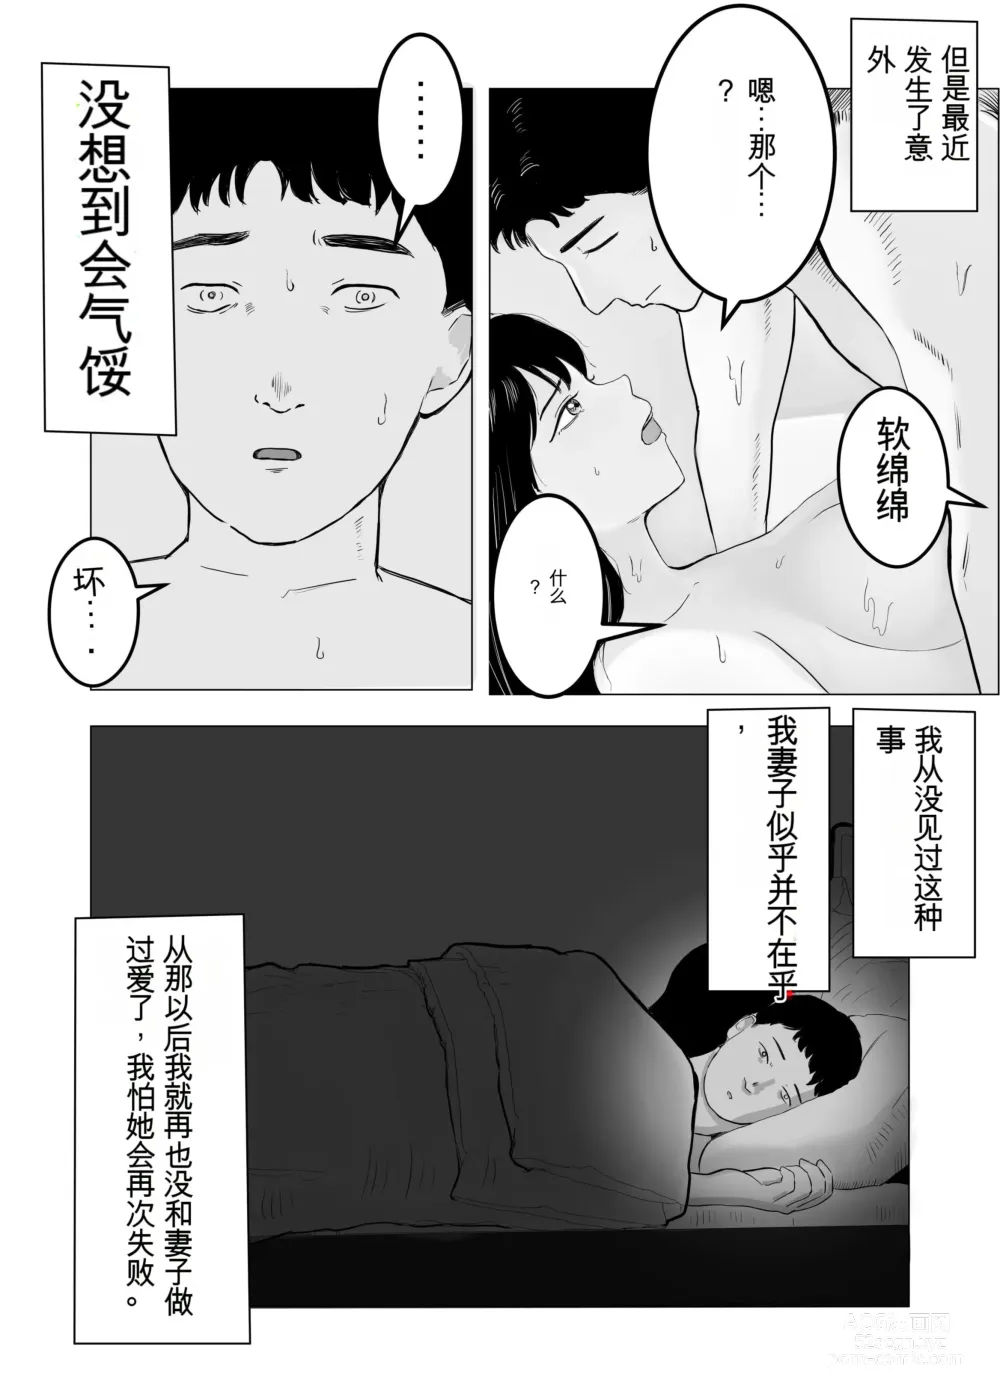 Page 13 of doujinshi 请让我睡一觉再考虑一下